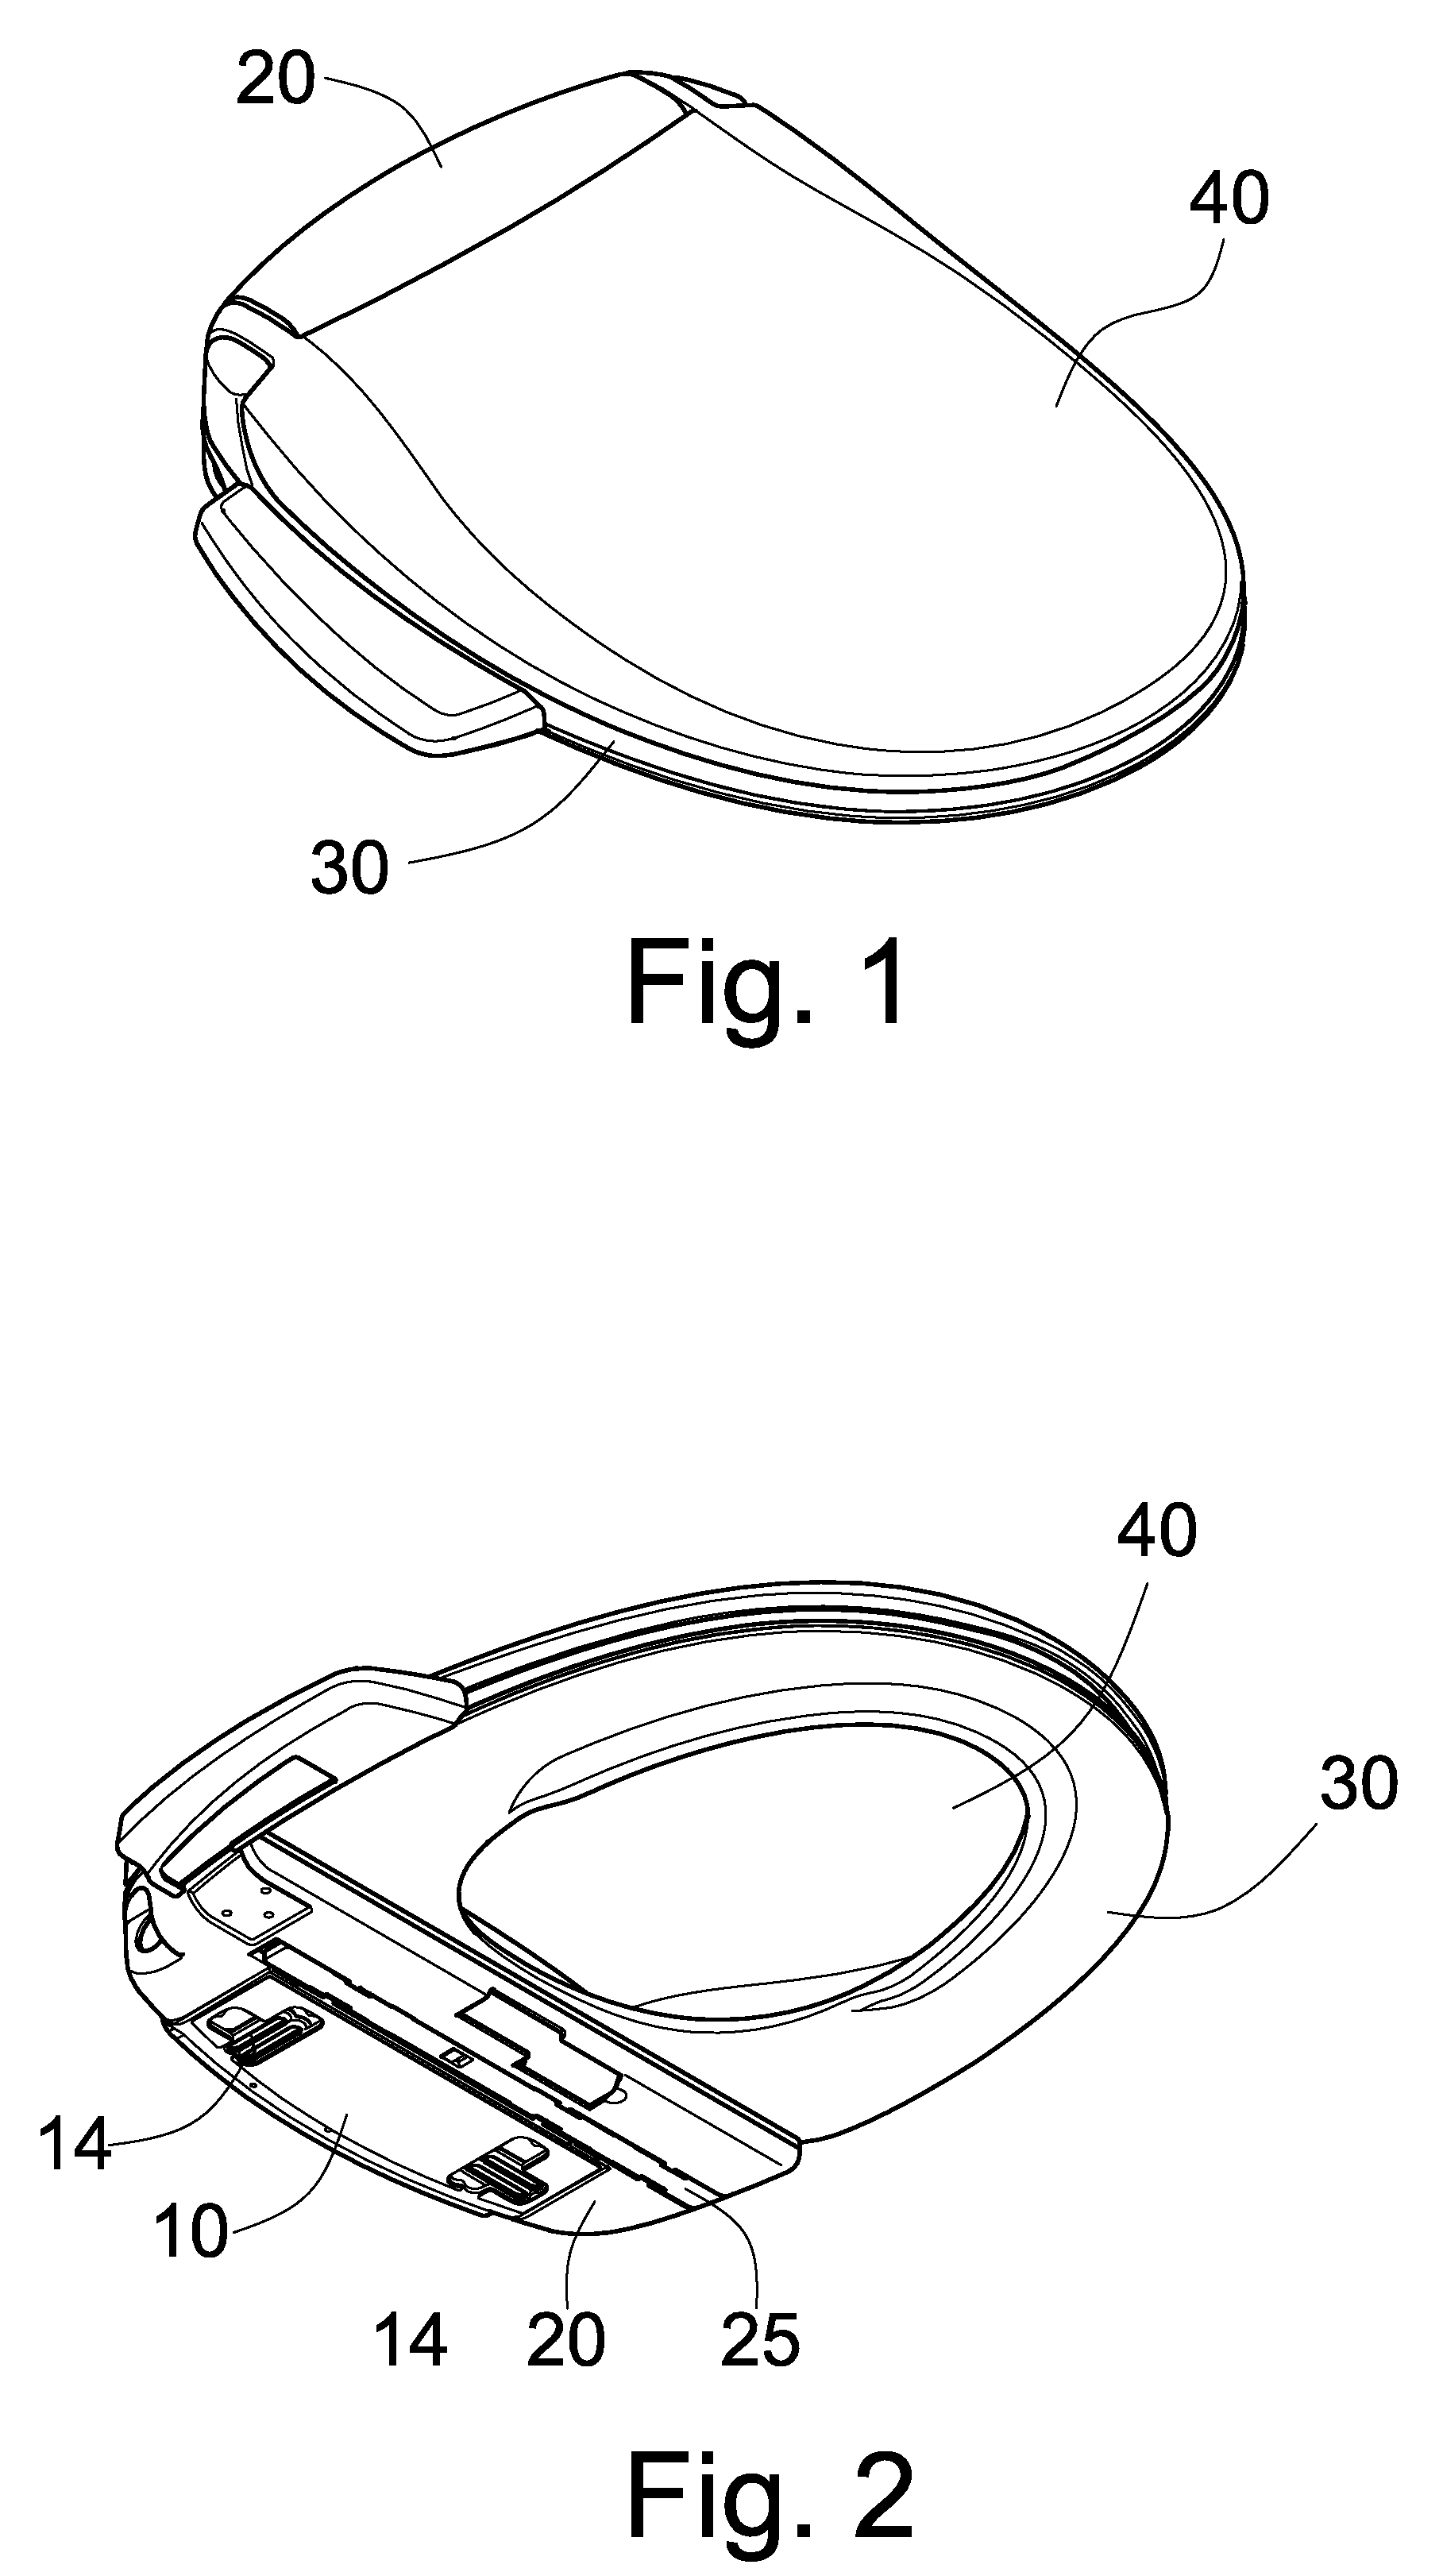 Detachable connective device for toilet seat